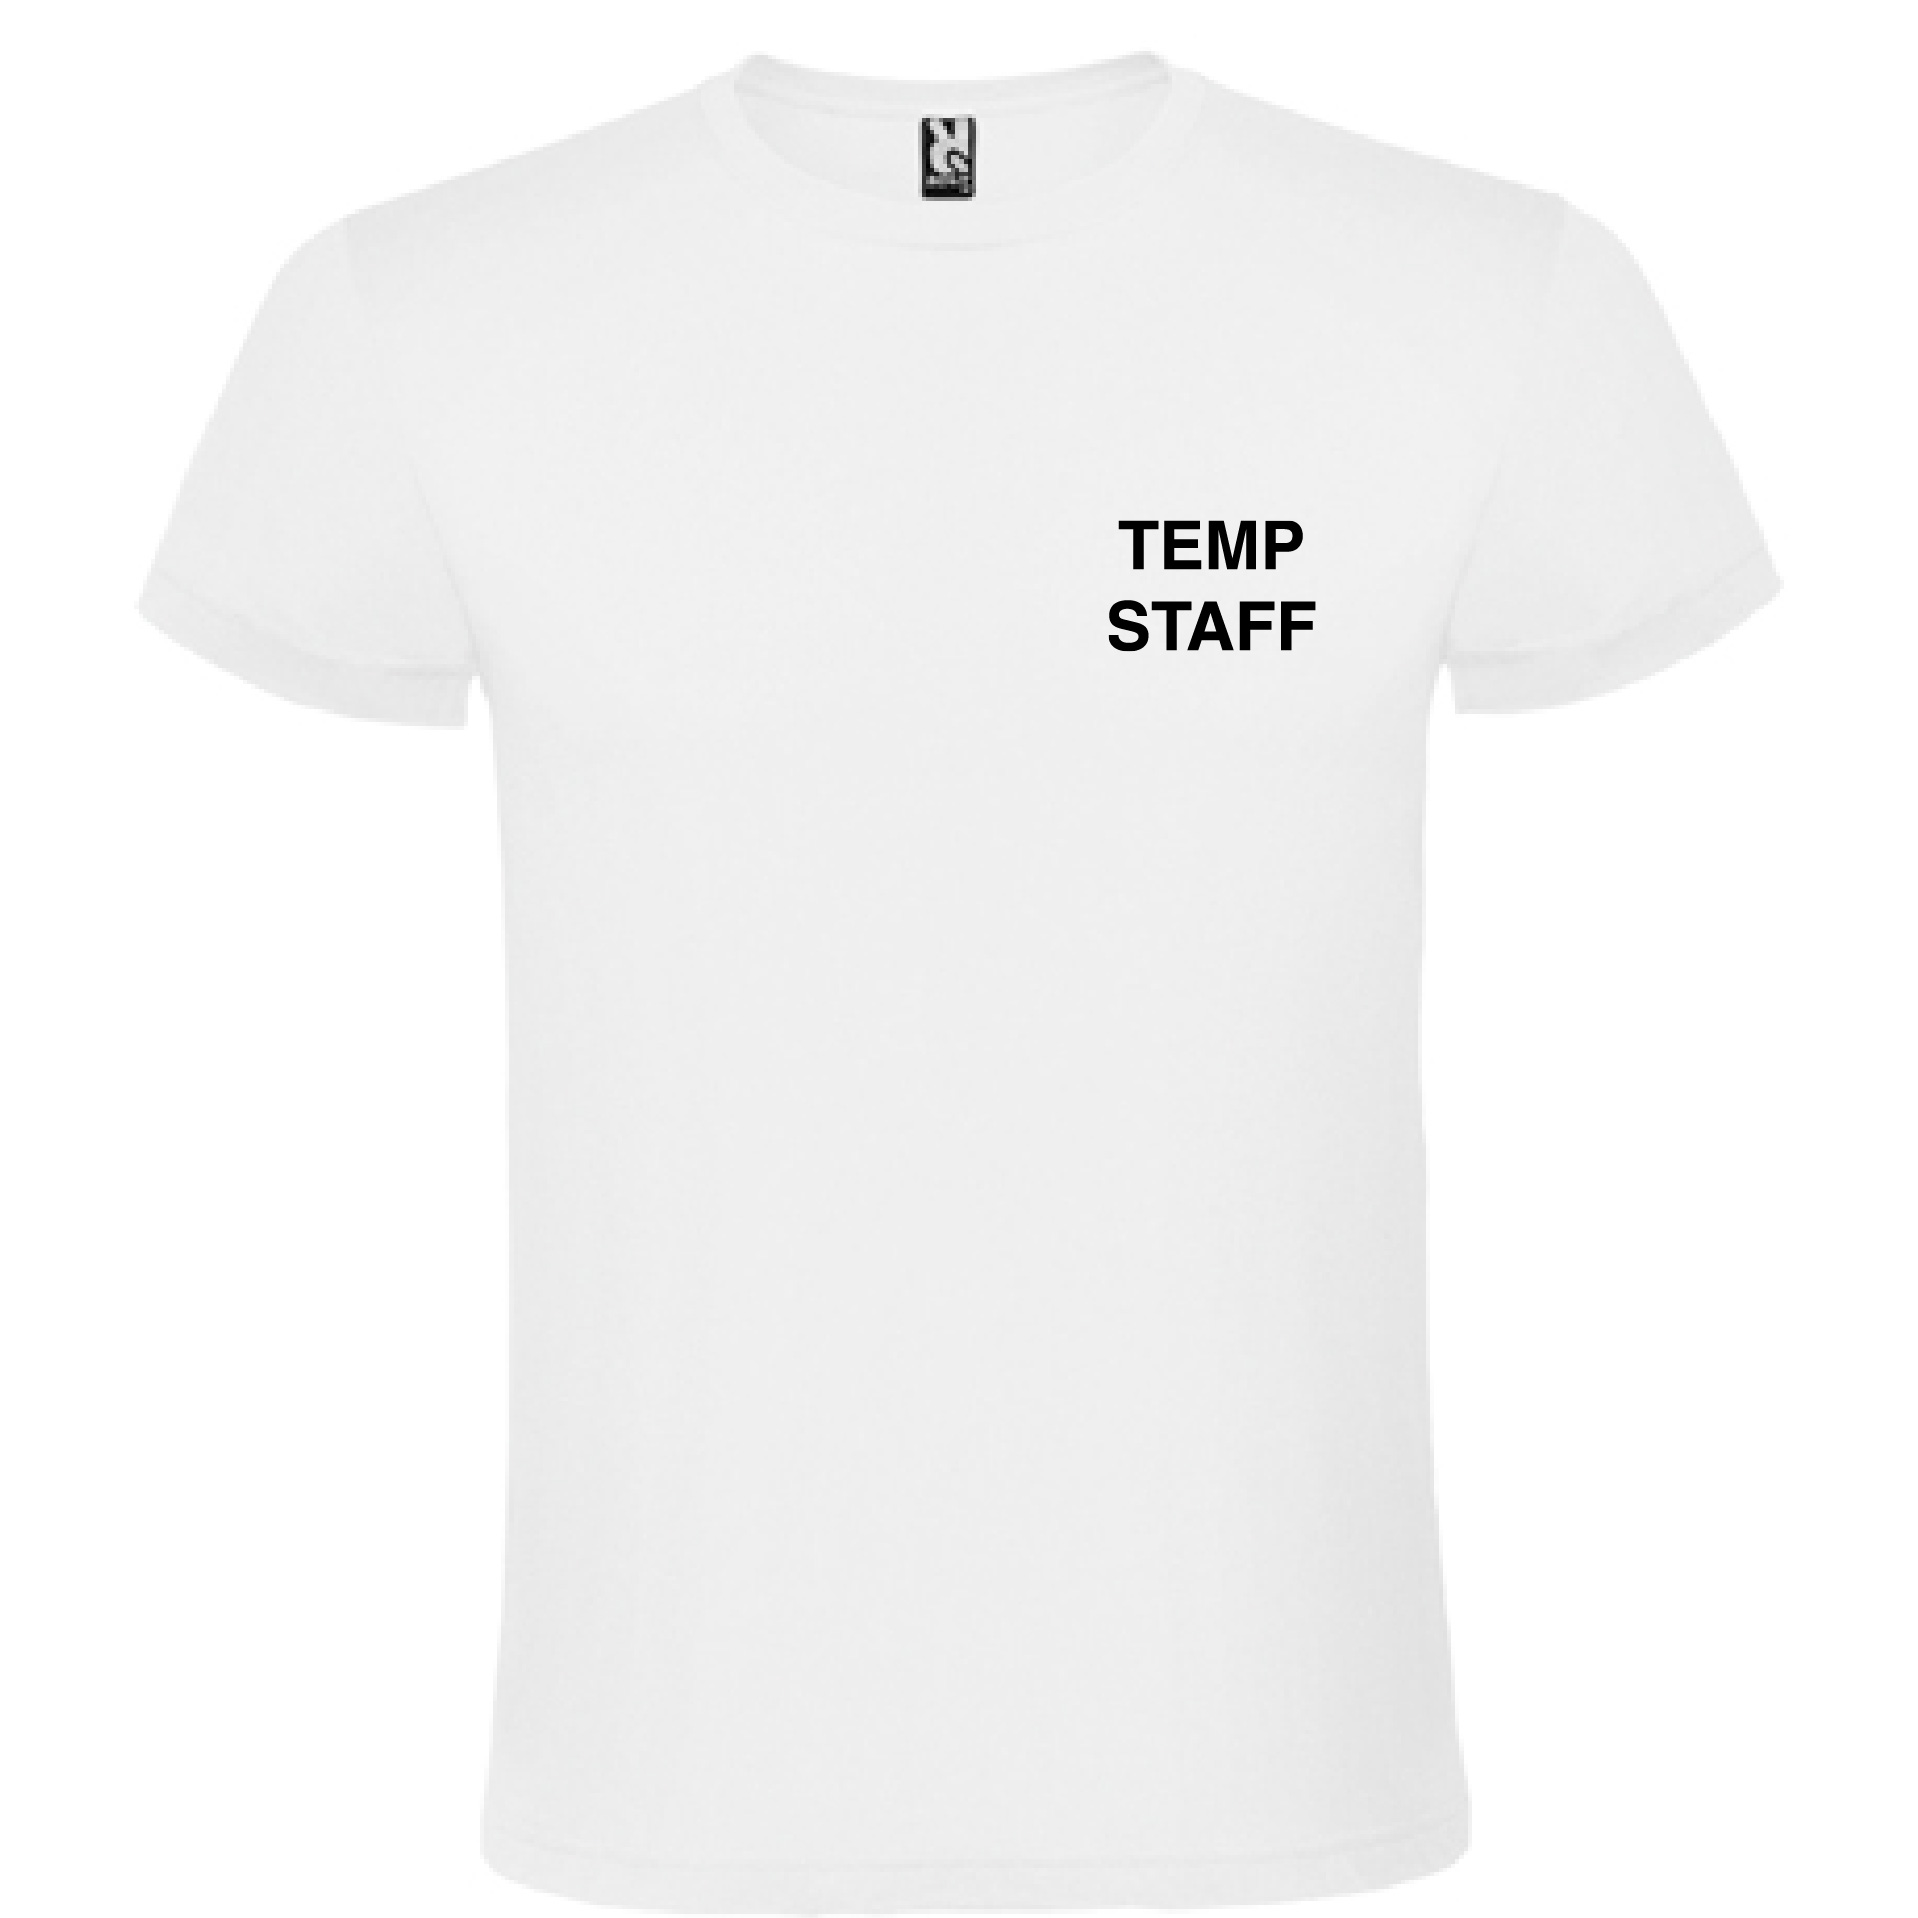 t-shirt_temp-staff_front_white.jpg